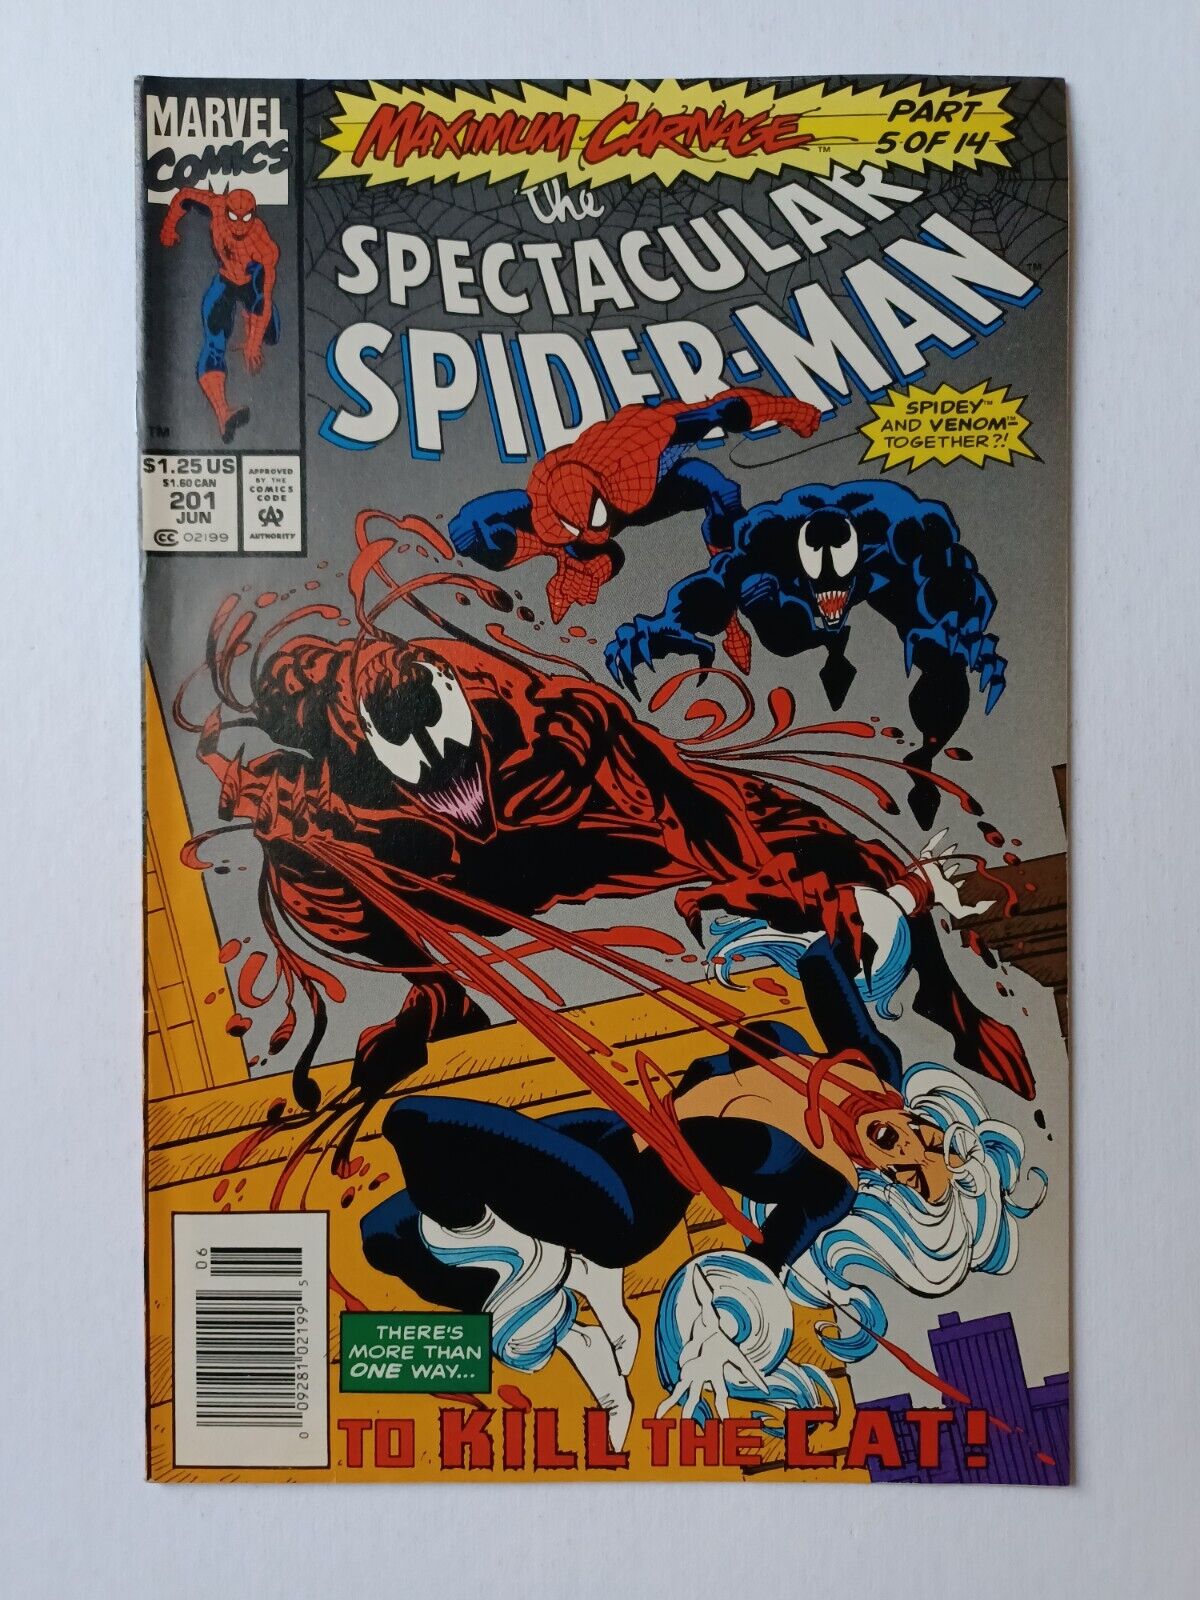 Spectacular Spider-Man #201 - Newsstand Edition - Maximum Carnage Part 5